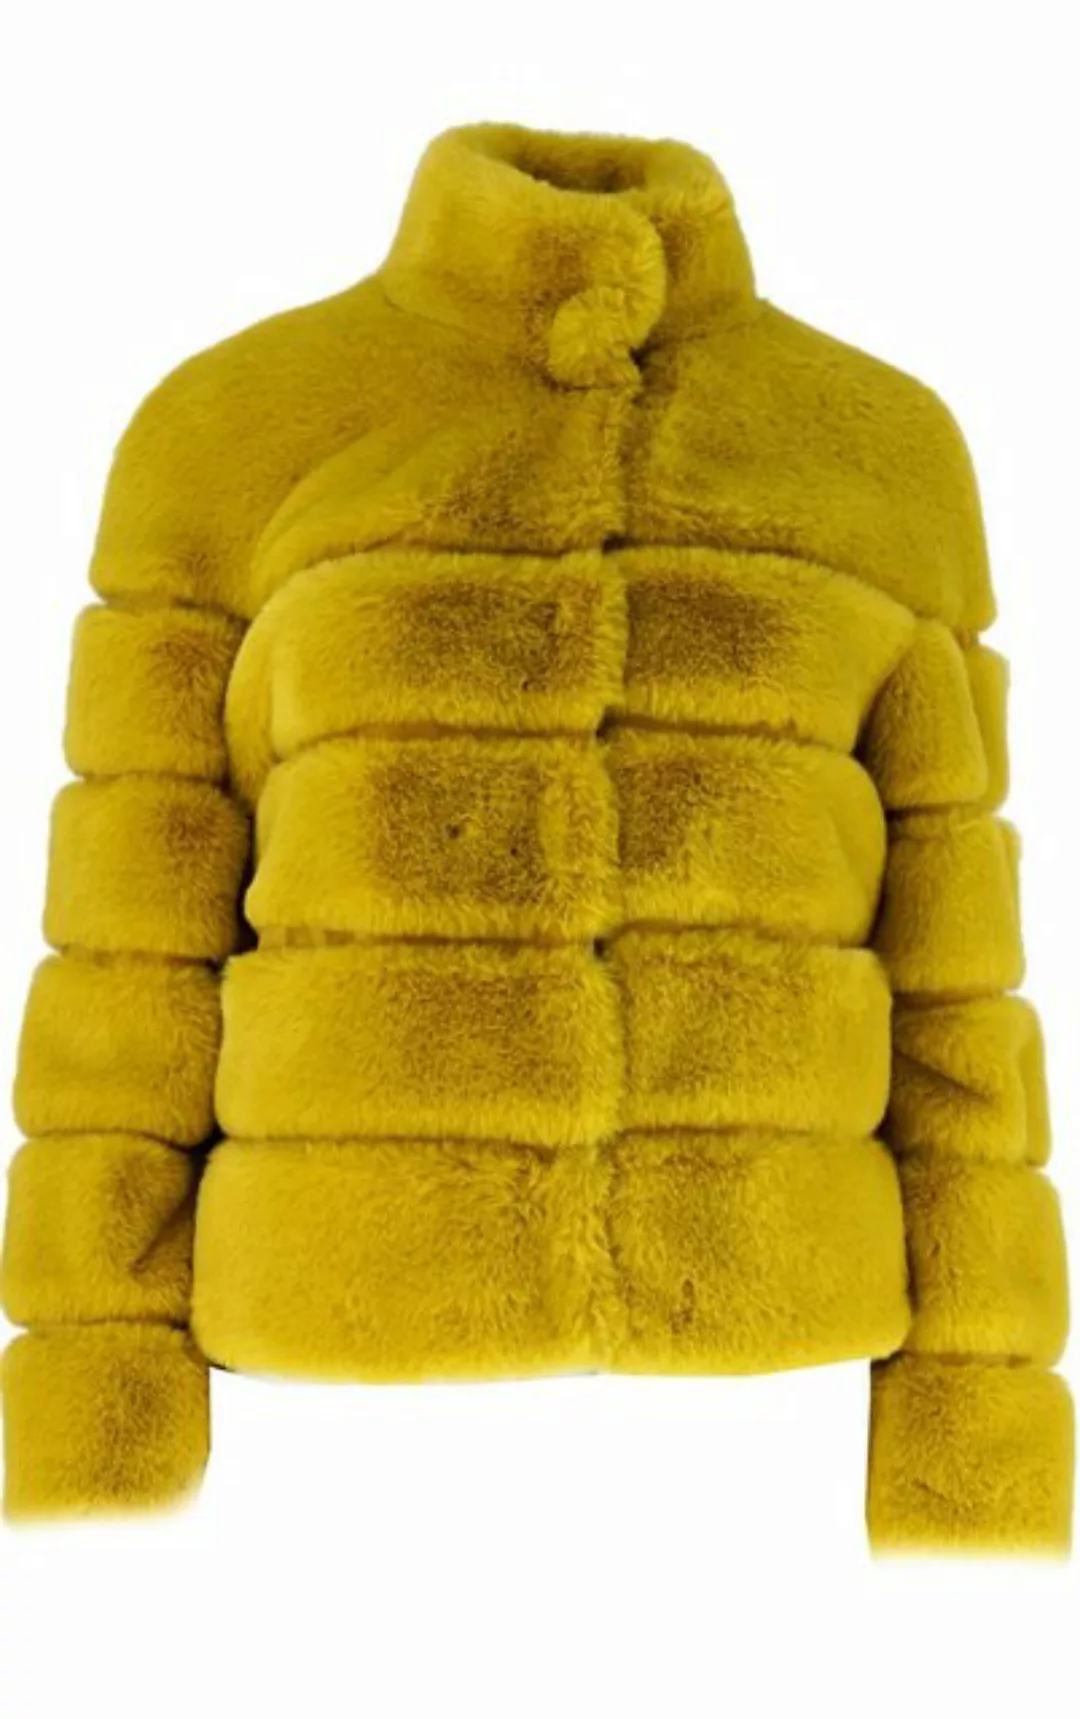 Antonio Cavosi Winterjacke hochwertige Web-Pellz Jacke in gelb Winterjacke günstig online kaufen